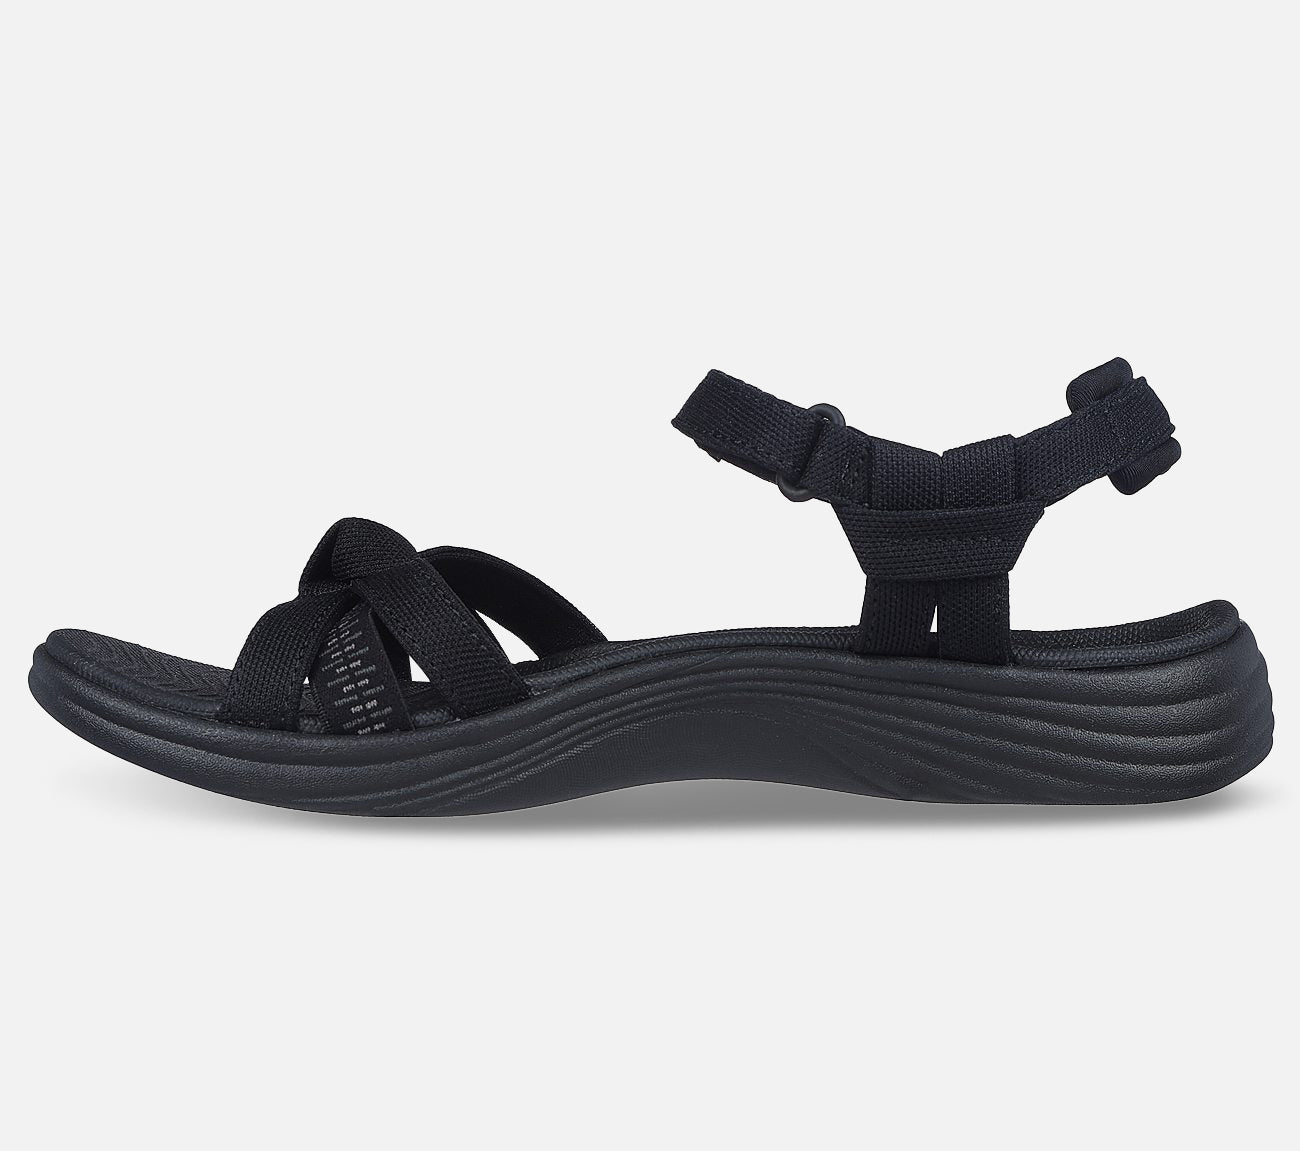 Arch Fit Radiance - Sensational Sandal Skechers